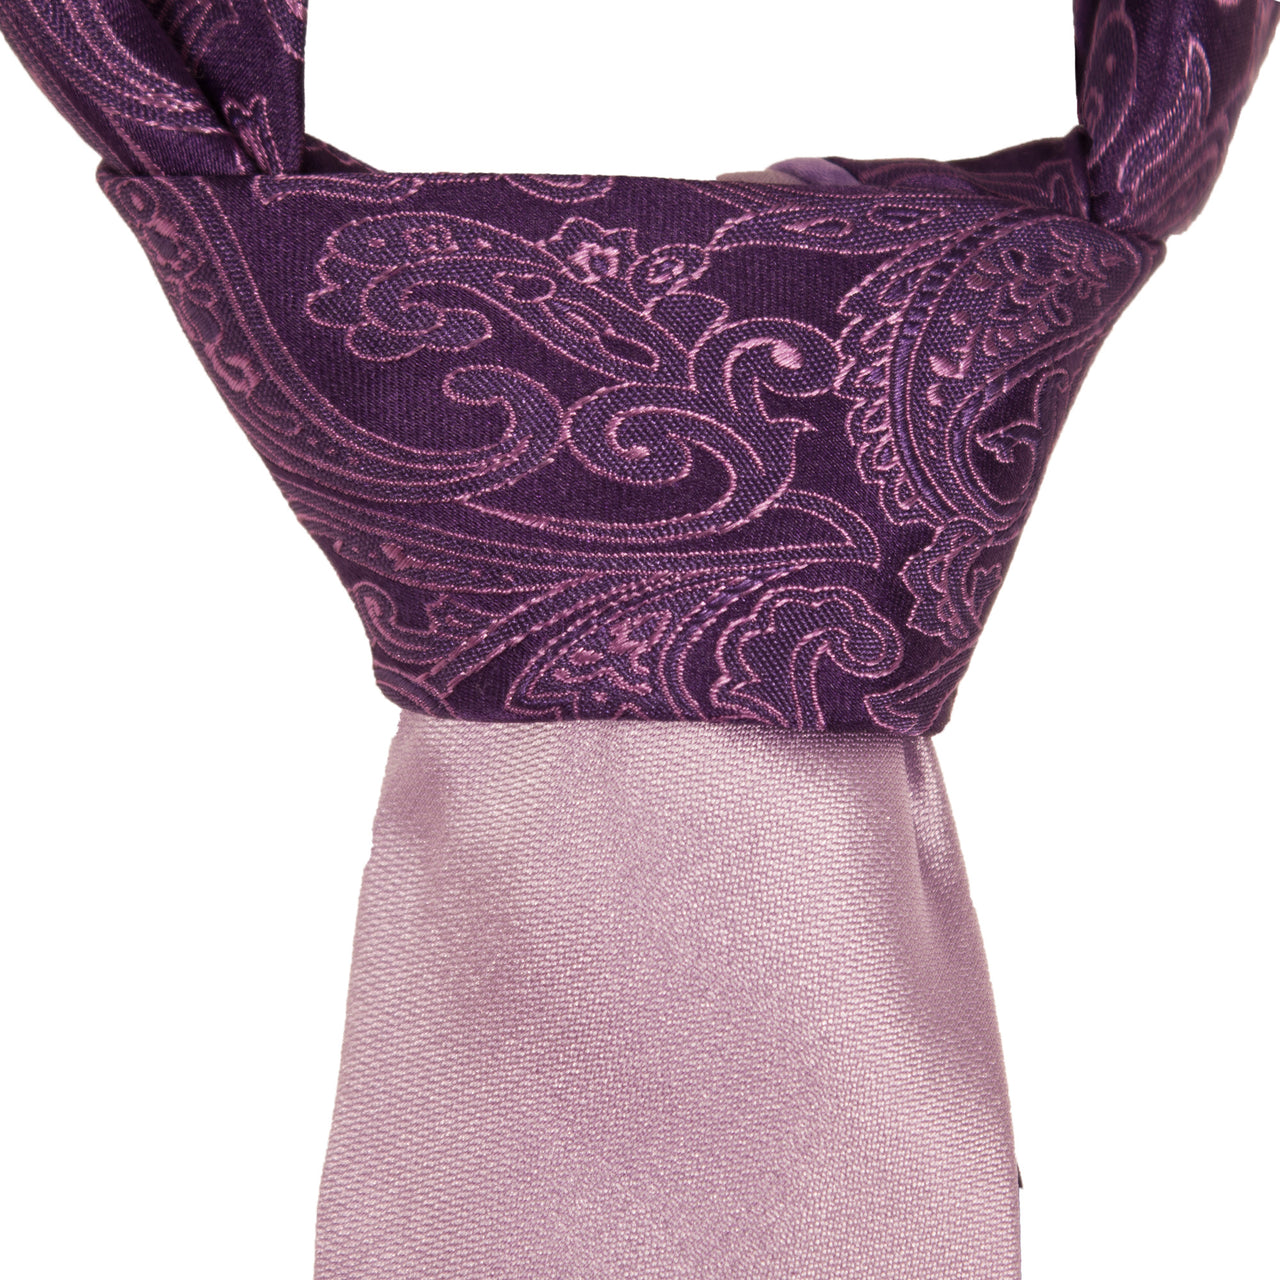 Full Knot | Lavender & Purple Paisley